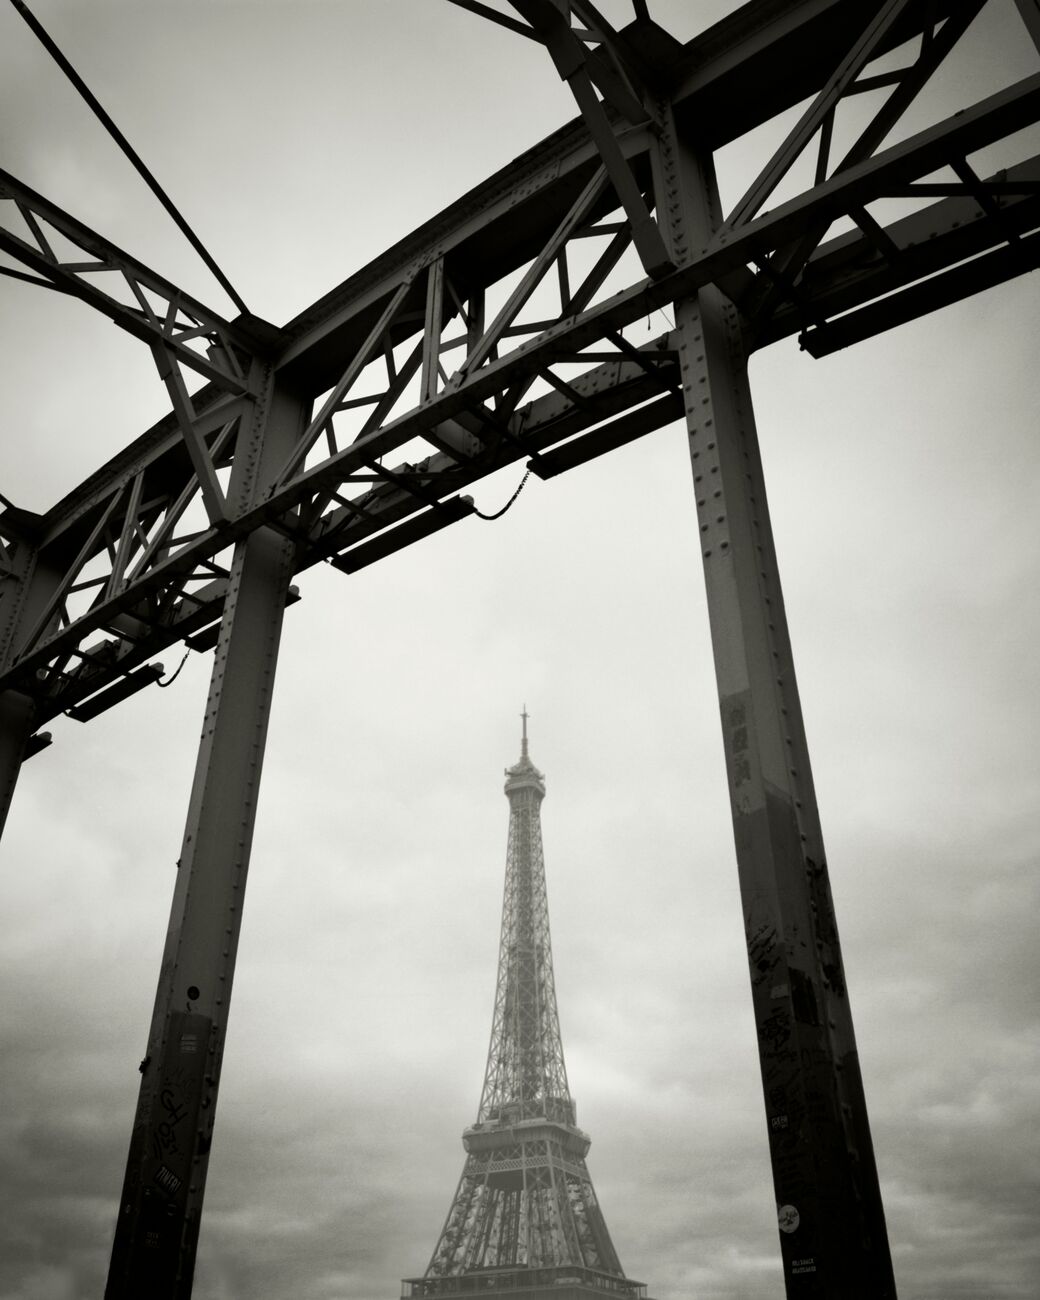 Eiffel Tower, Debilly Footbridge, Paris, France. February 2022. Ref-11662 - Denis Olivier Photography